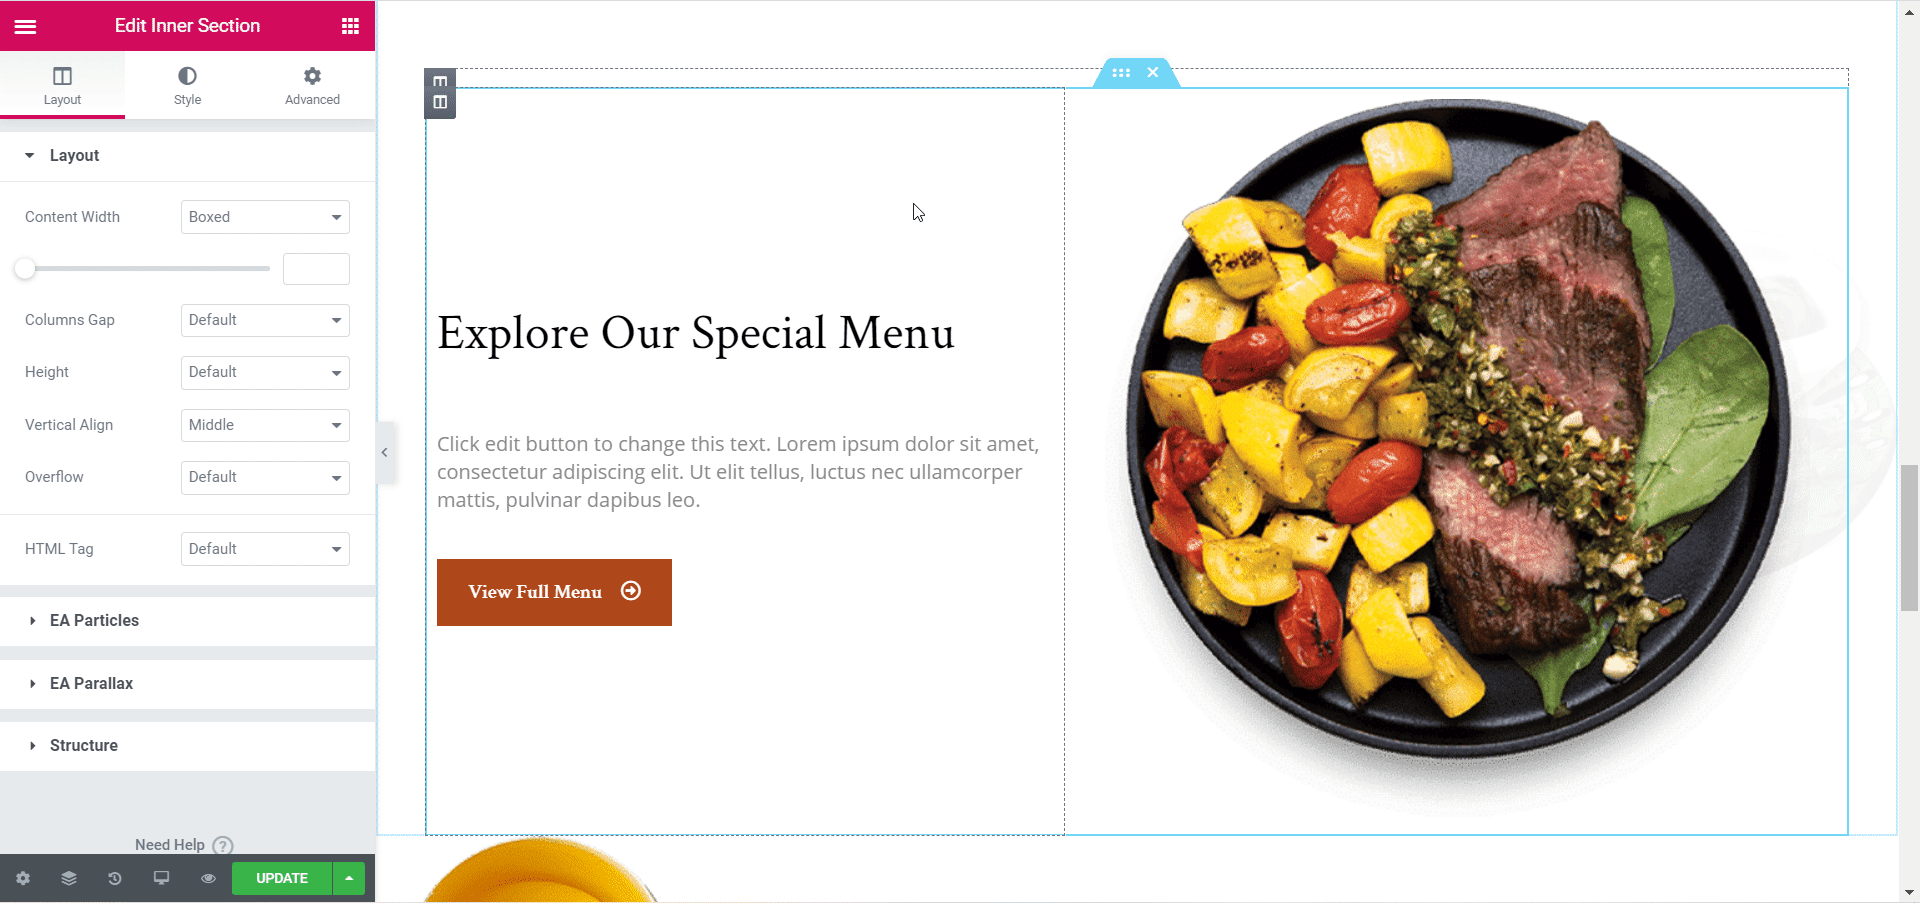 Restaurant Website